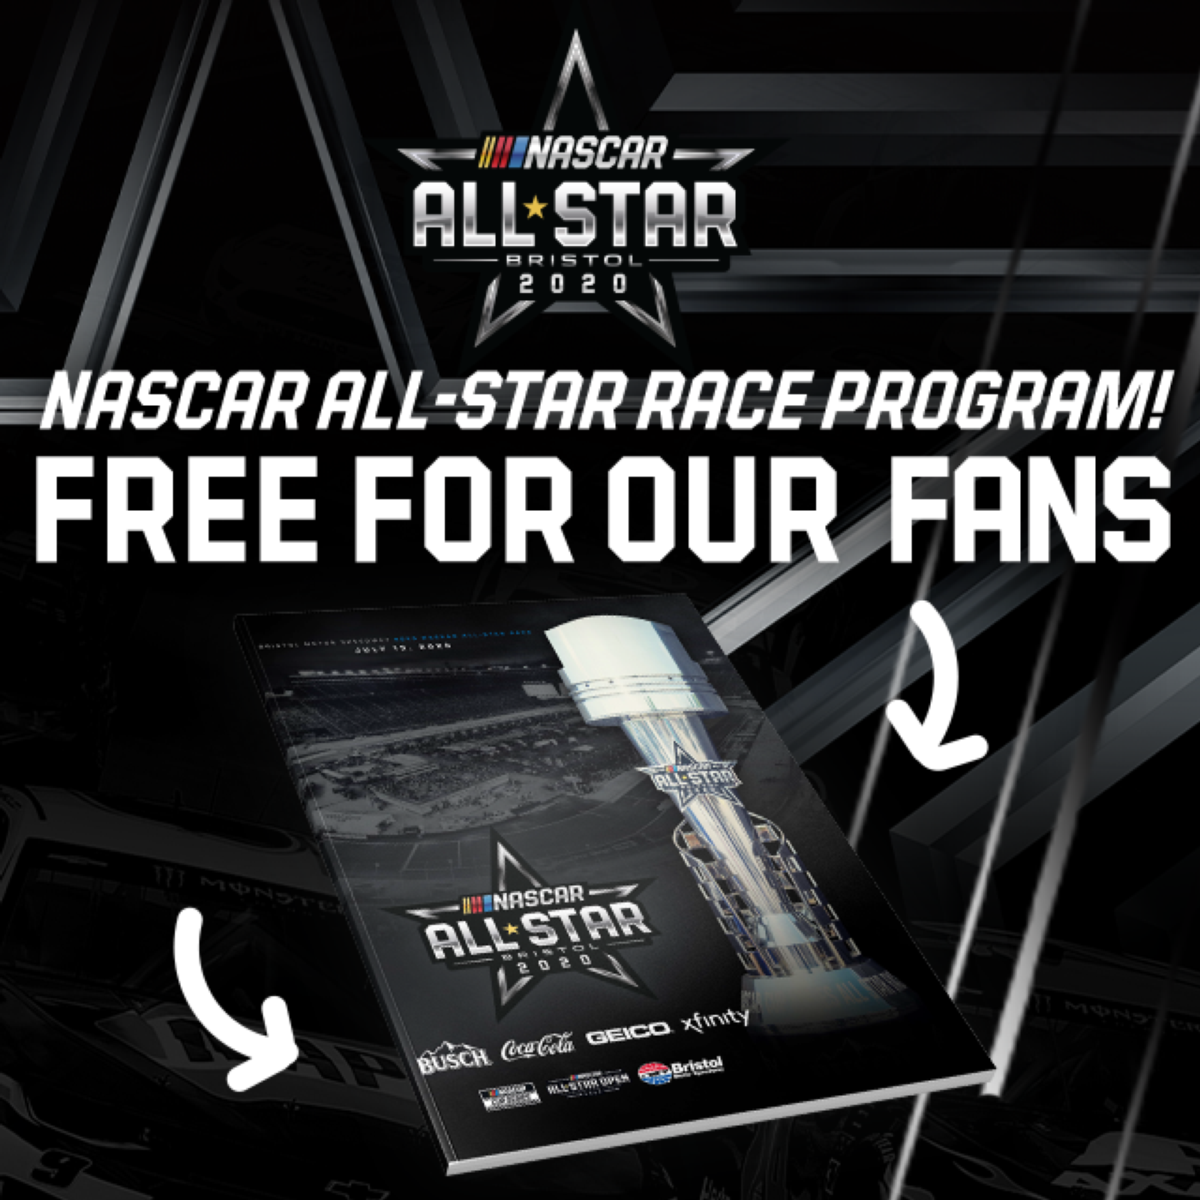 Official commemorative digital NASCAR AllStar Race program available